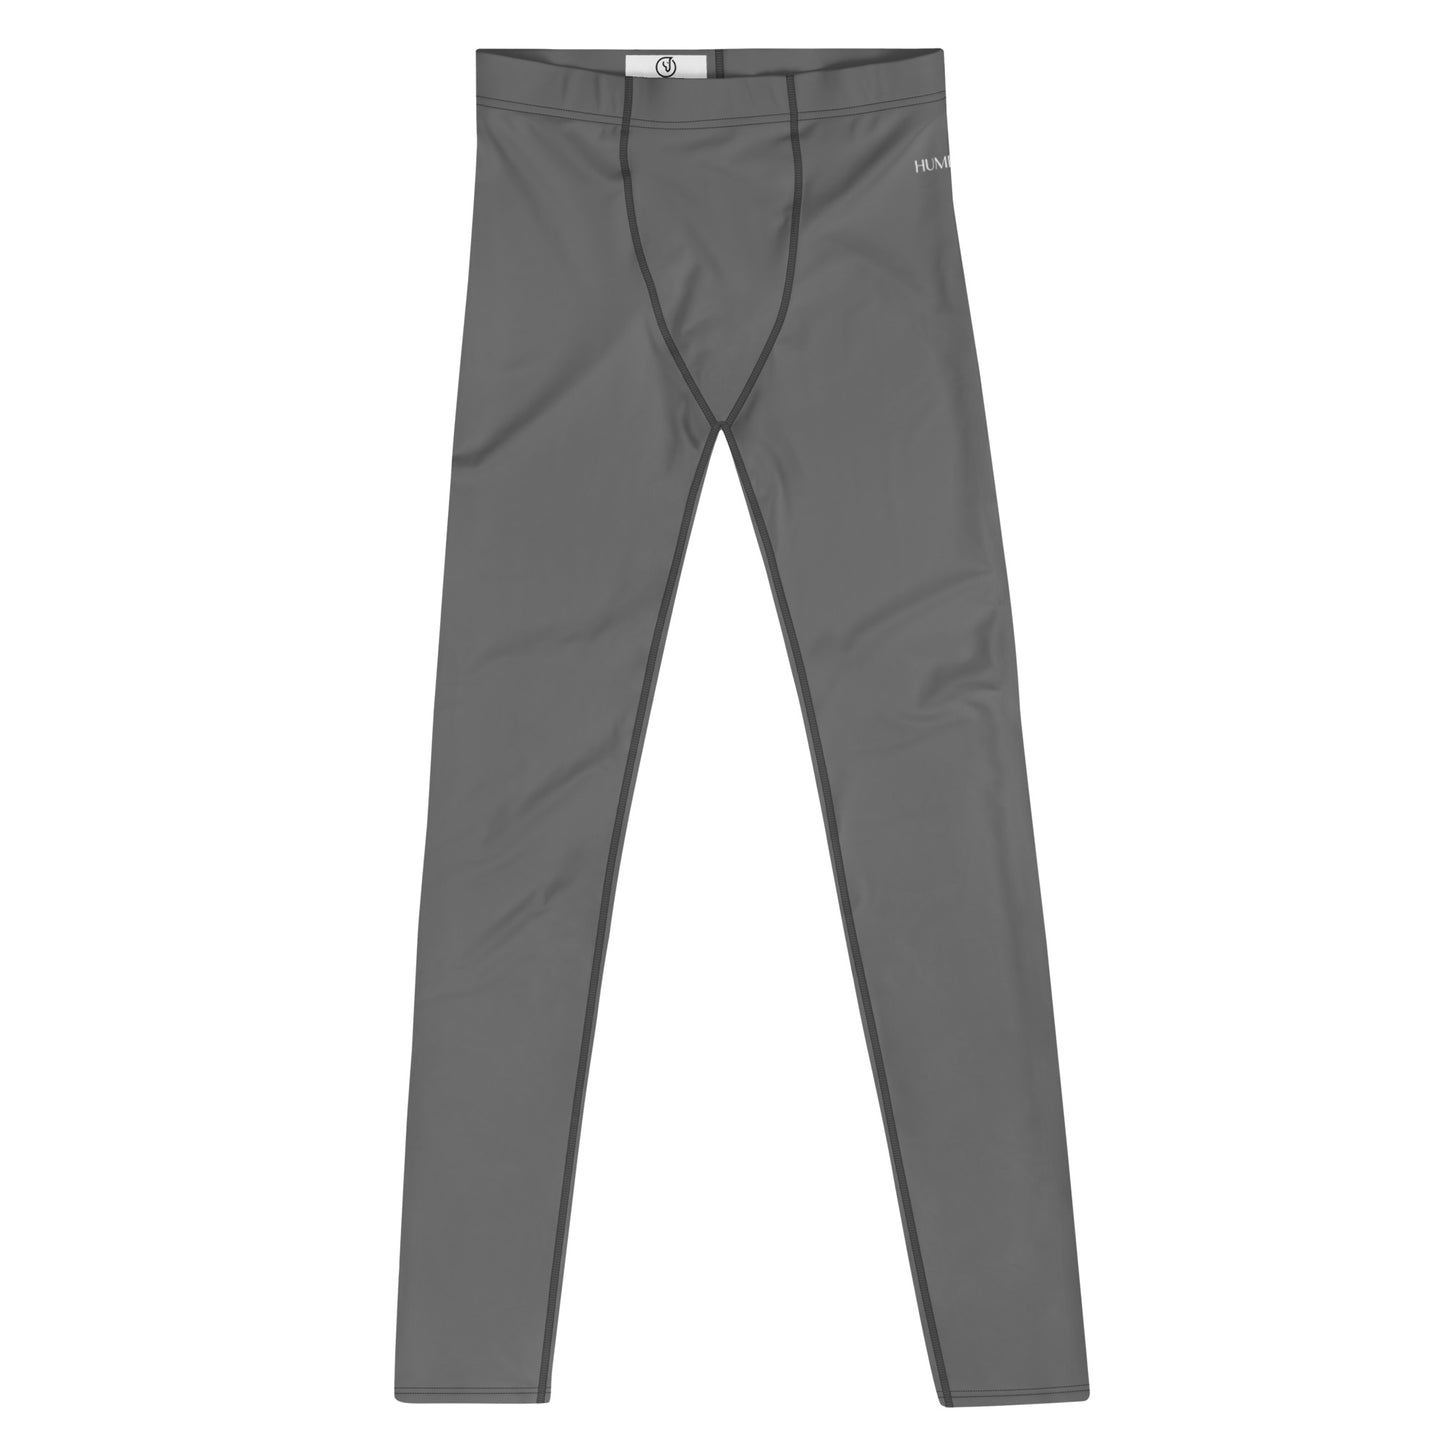 Humble Sportswear, men's long color match grey compression sports leggings 